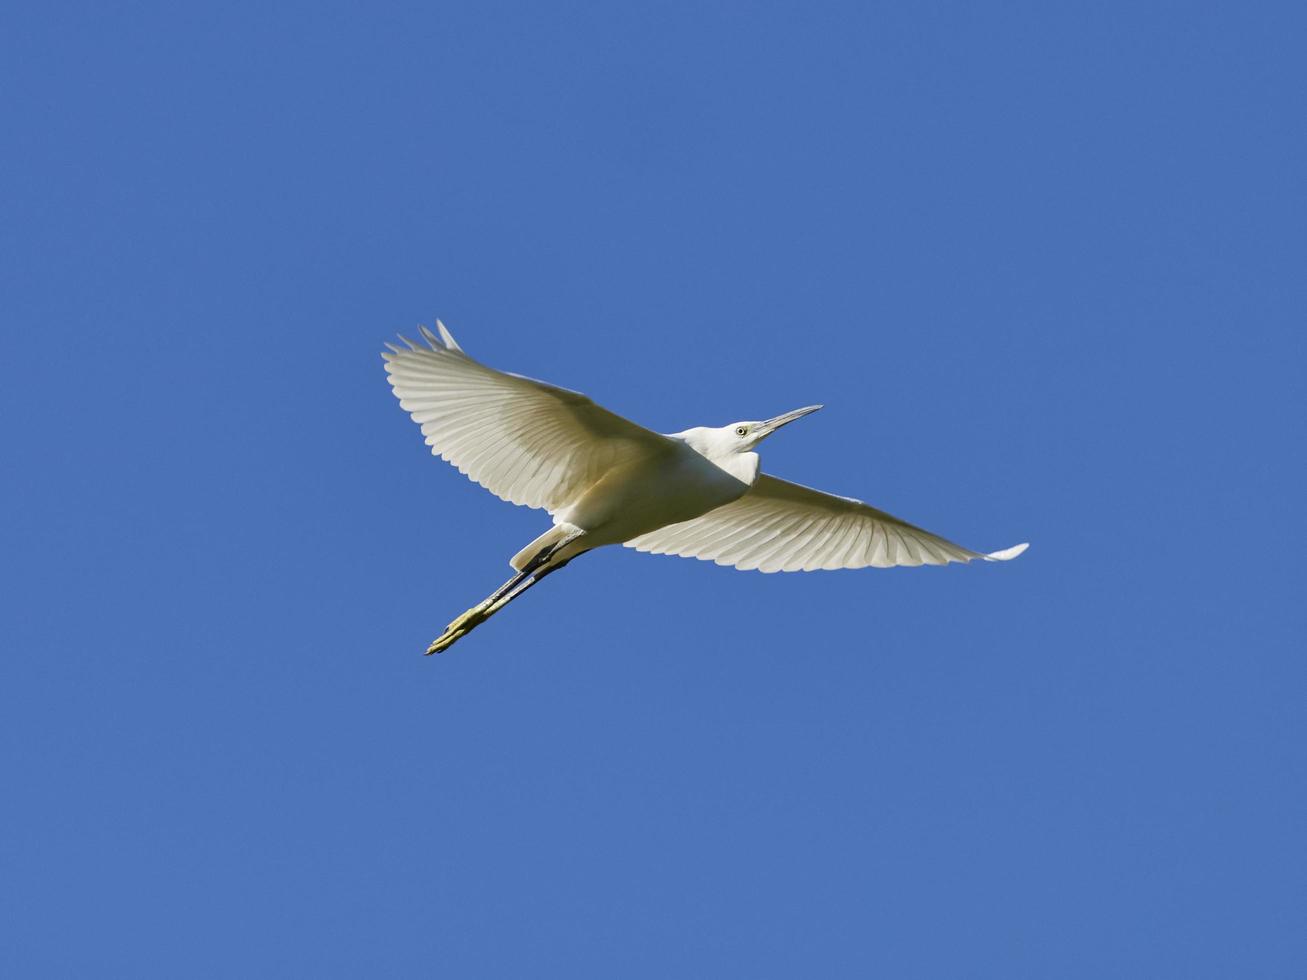 liten egret, egretta garzetta, flygande över bellusreservoaren, spanien foto